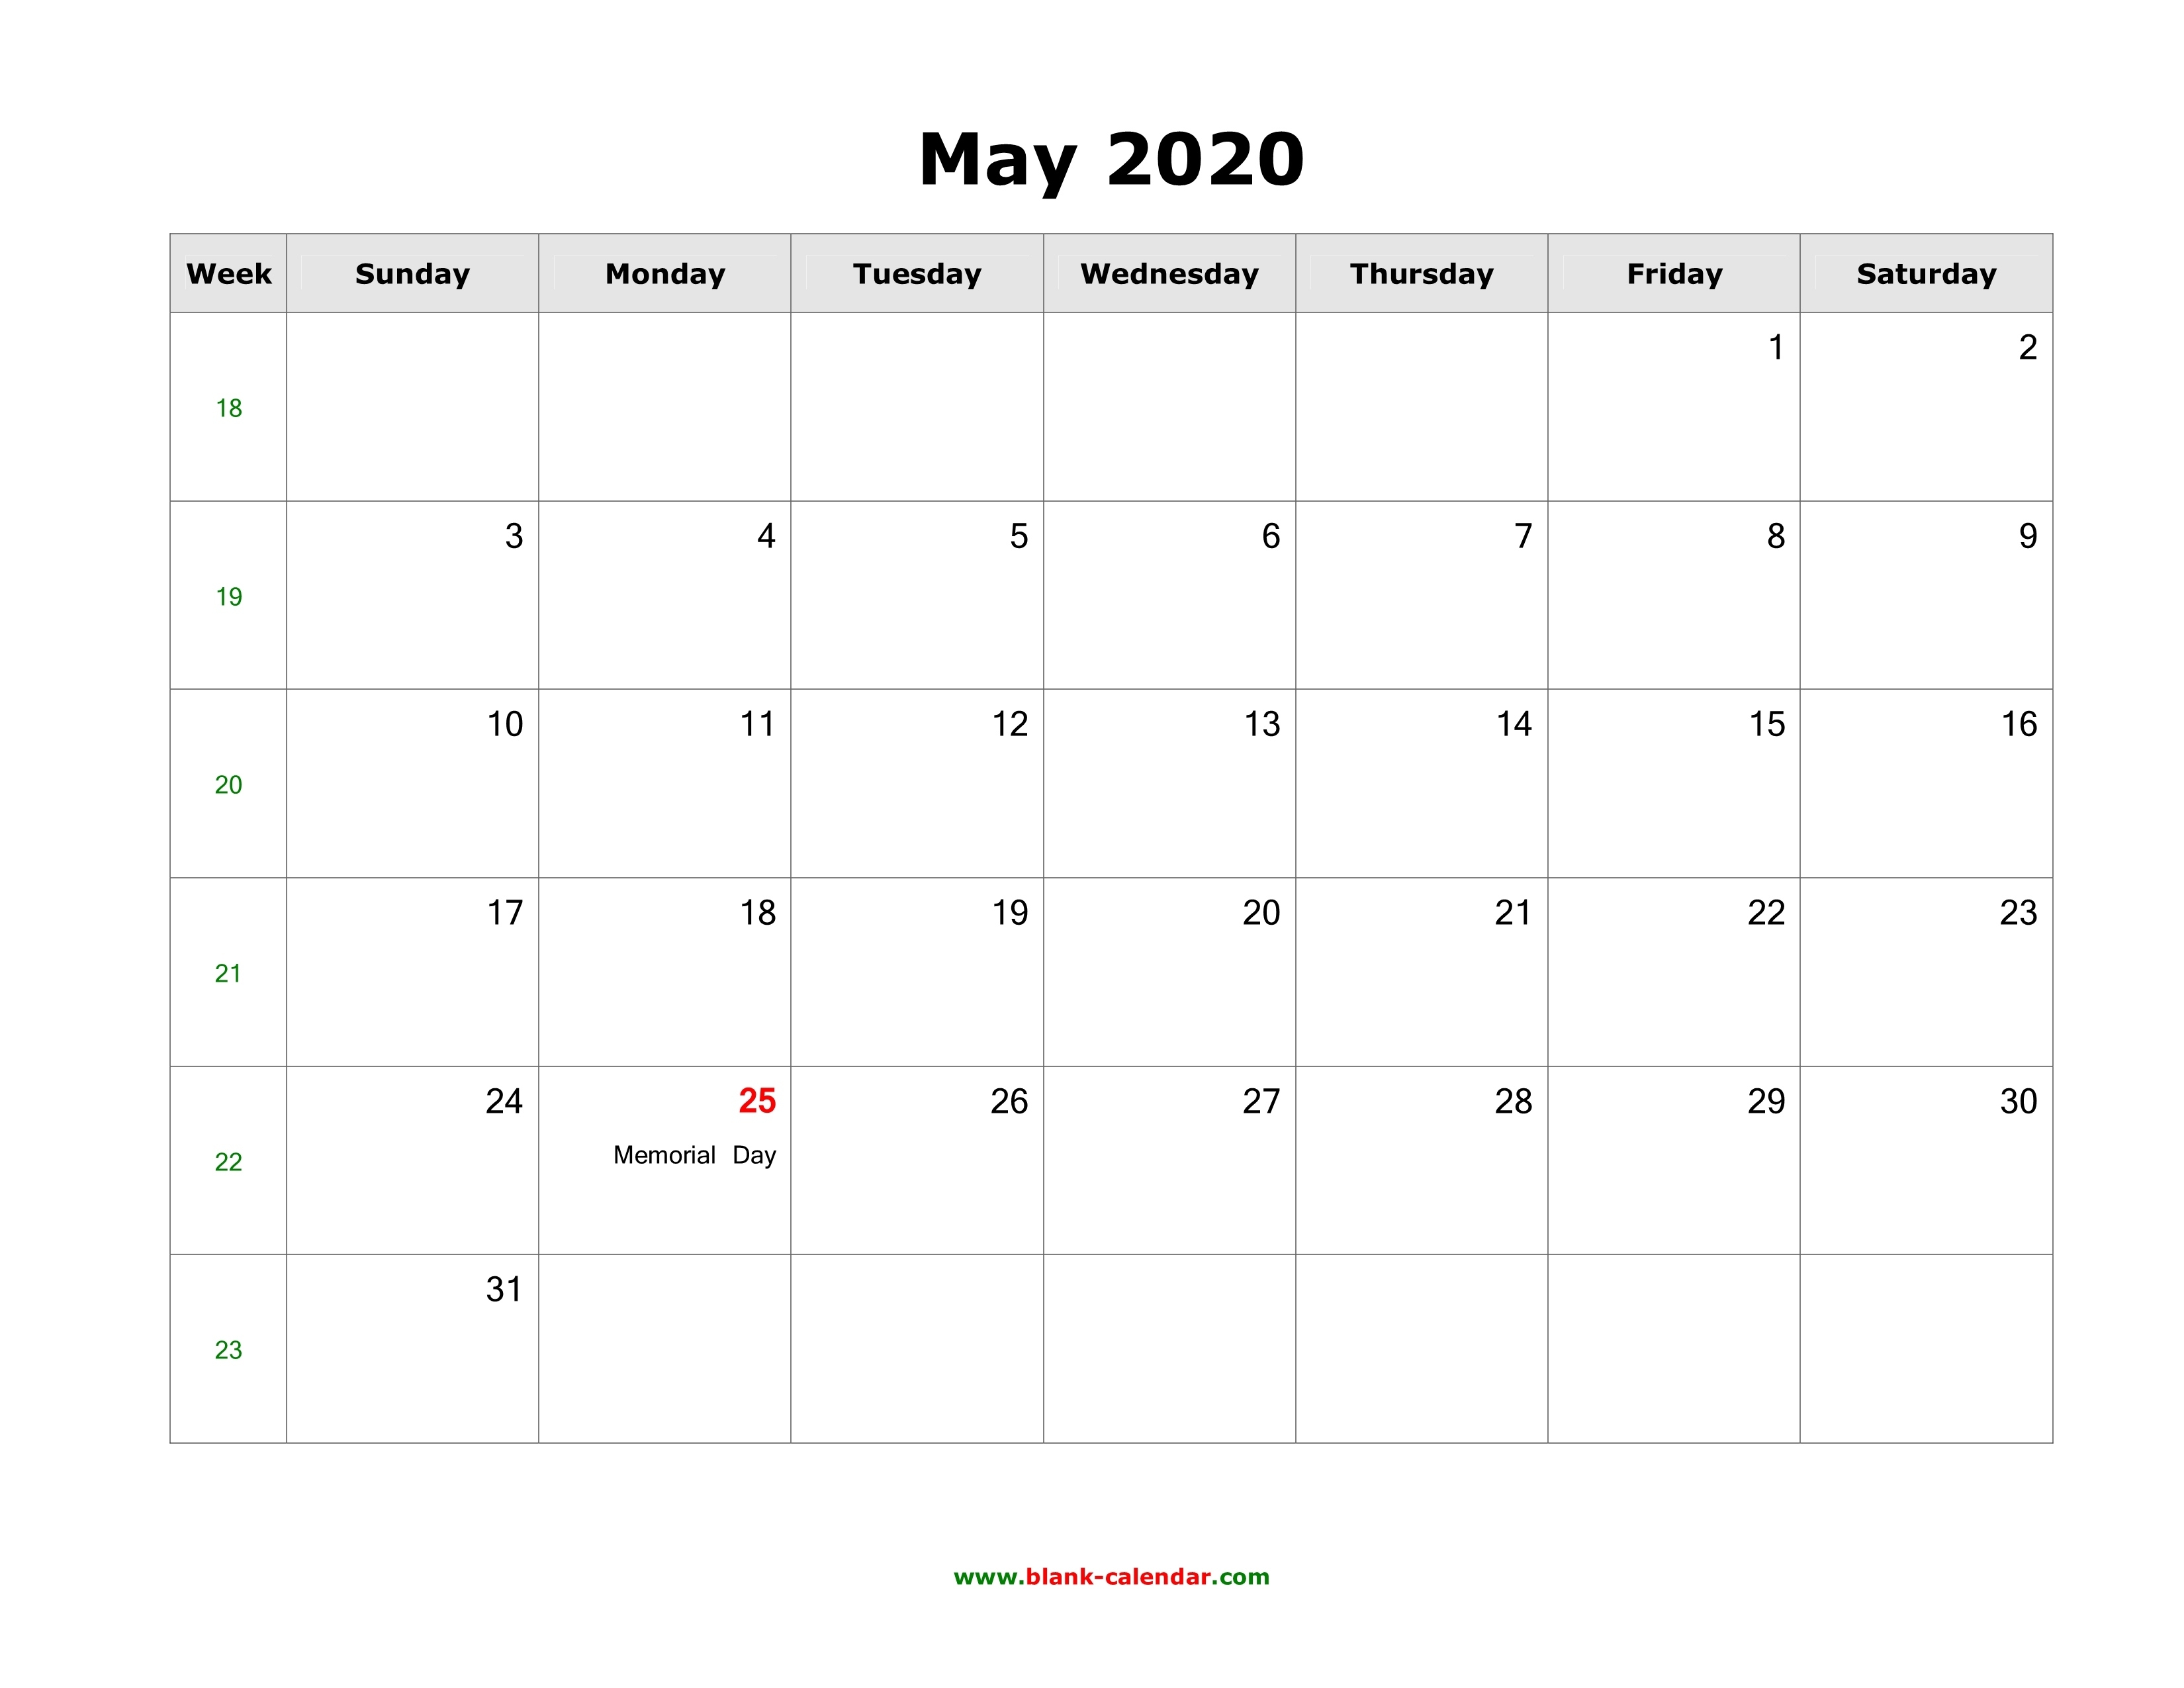 May 2020 Blank Calendar | Free Download Calendar Templates Calendar Template Ms Word